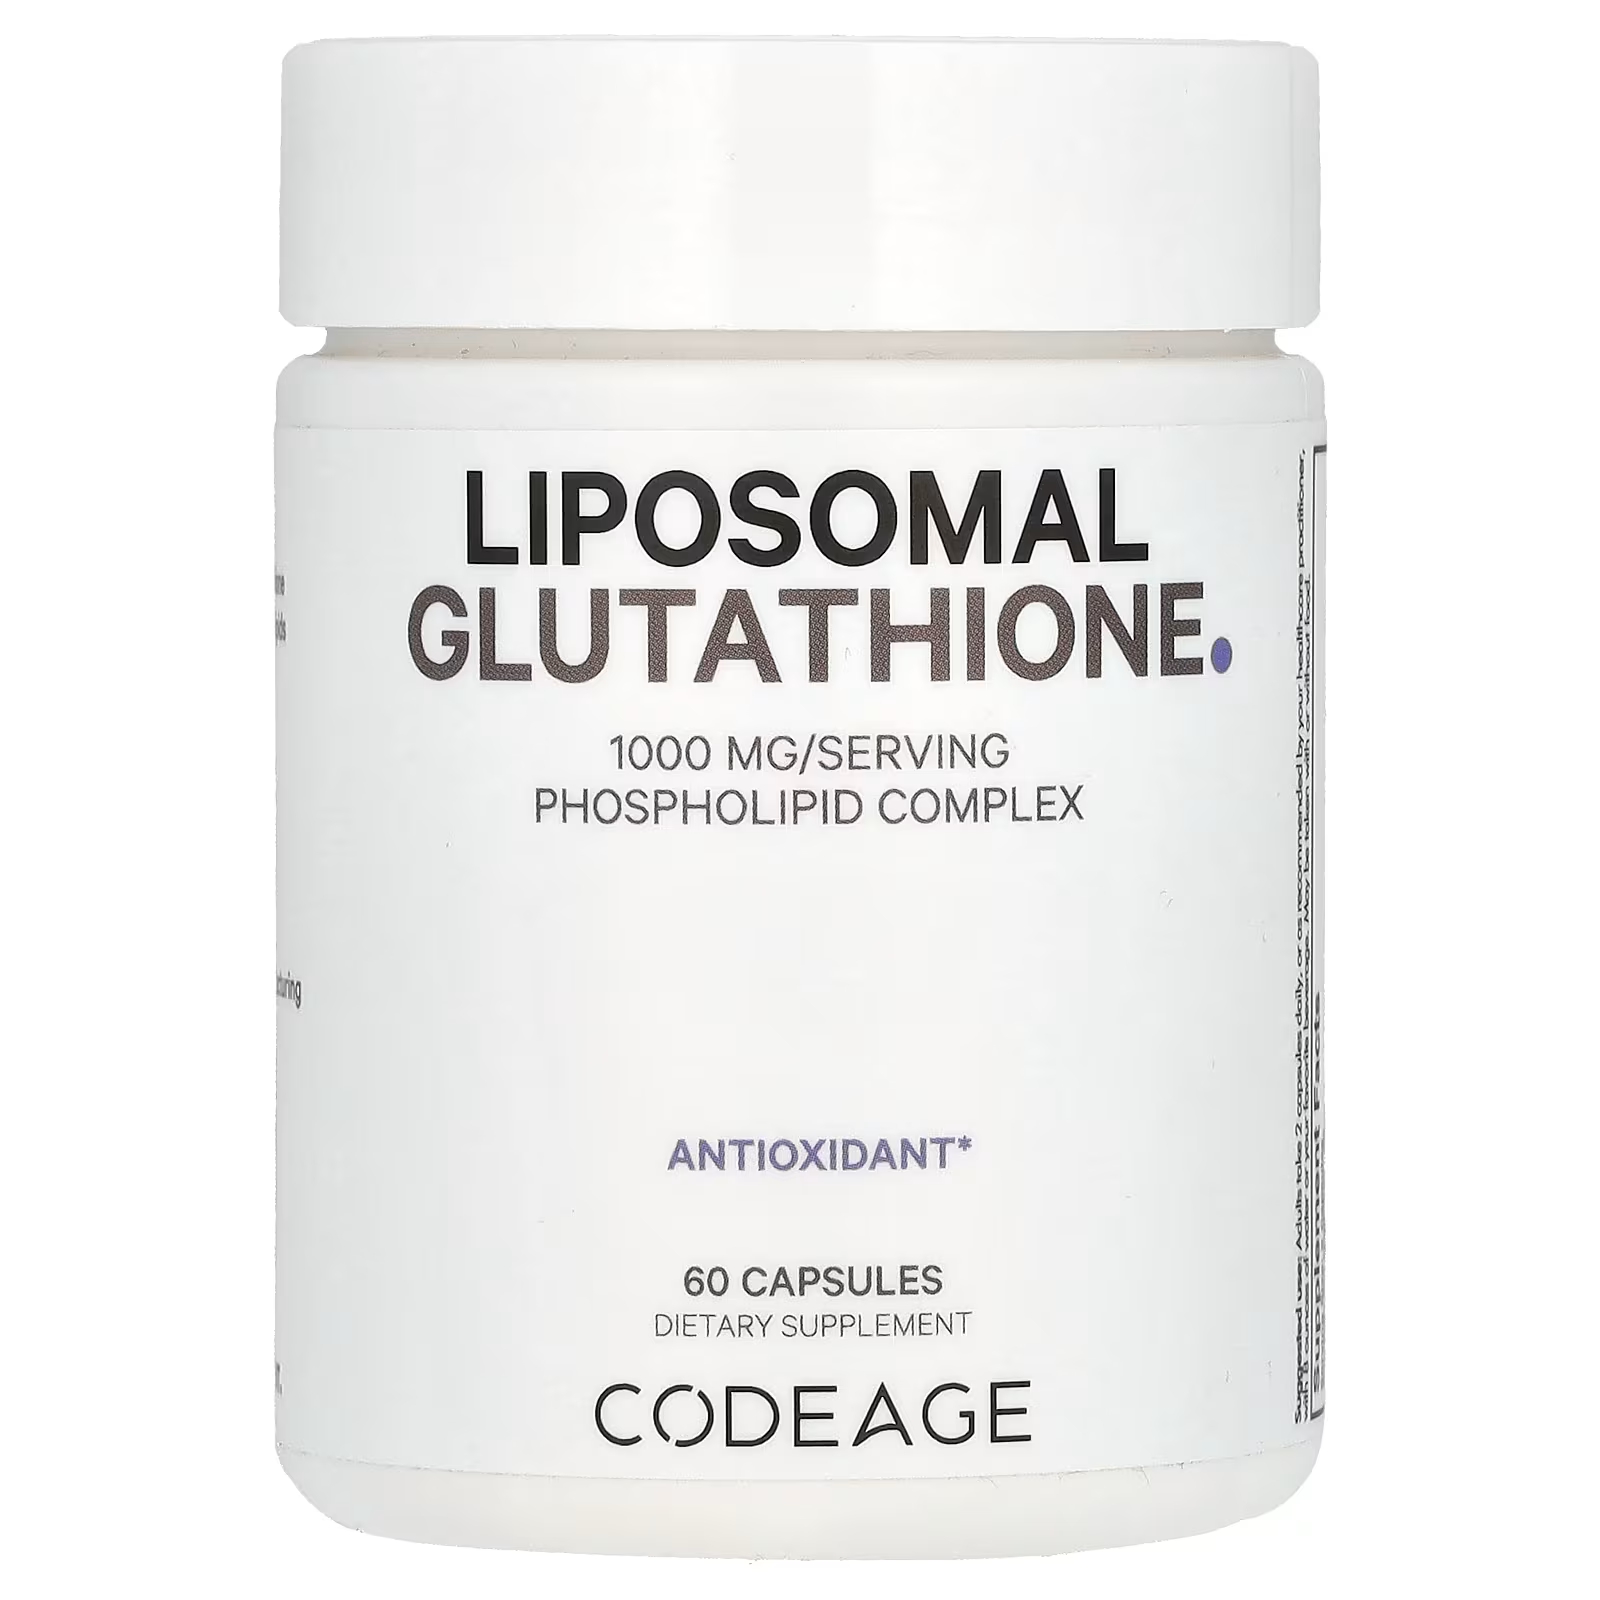 Codeage Липосомальный глутатион 1000 мг 60 капсул (500 мг на капсулу) codeage антиоксидант липосомальный глутатион 60 капсул